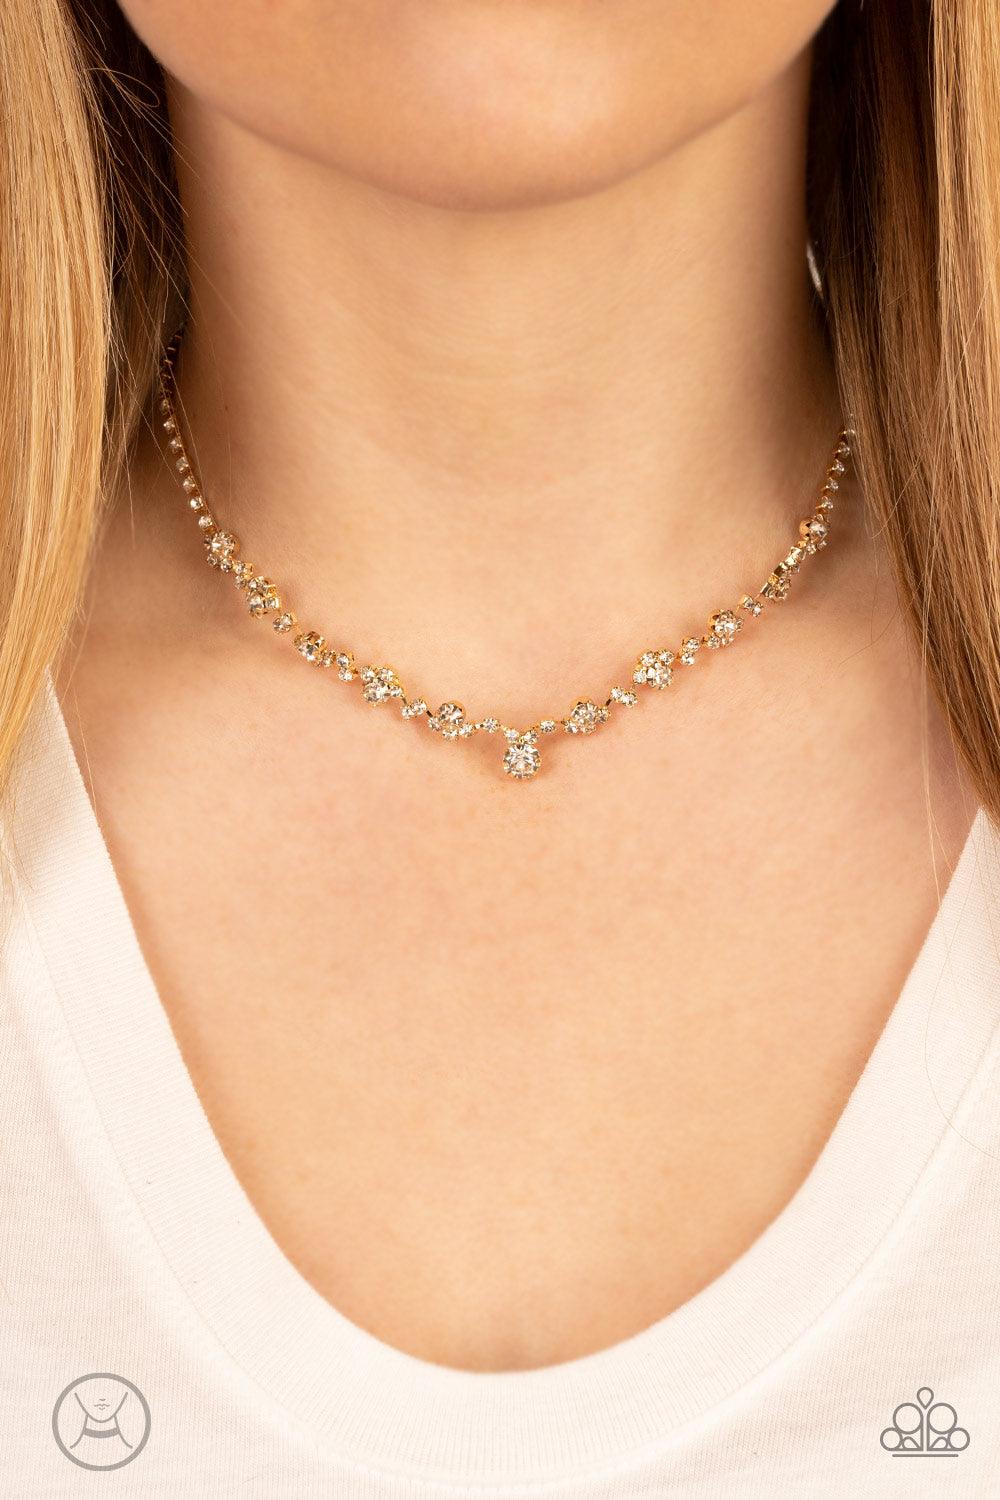 Regal Rebel Gold Necklace - Jewelry by Bretta